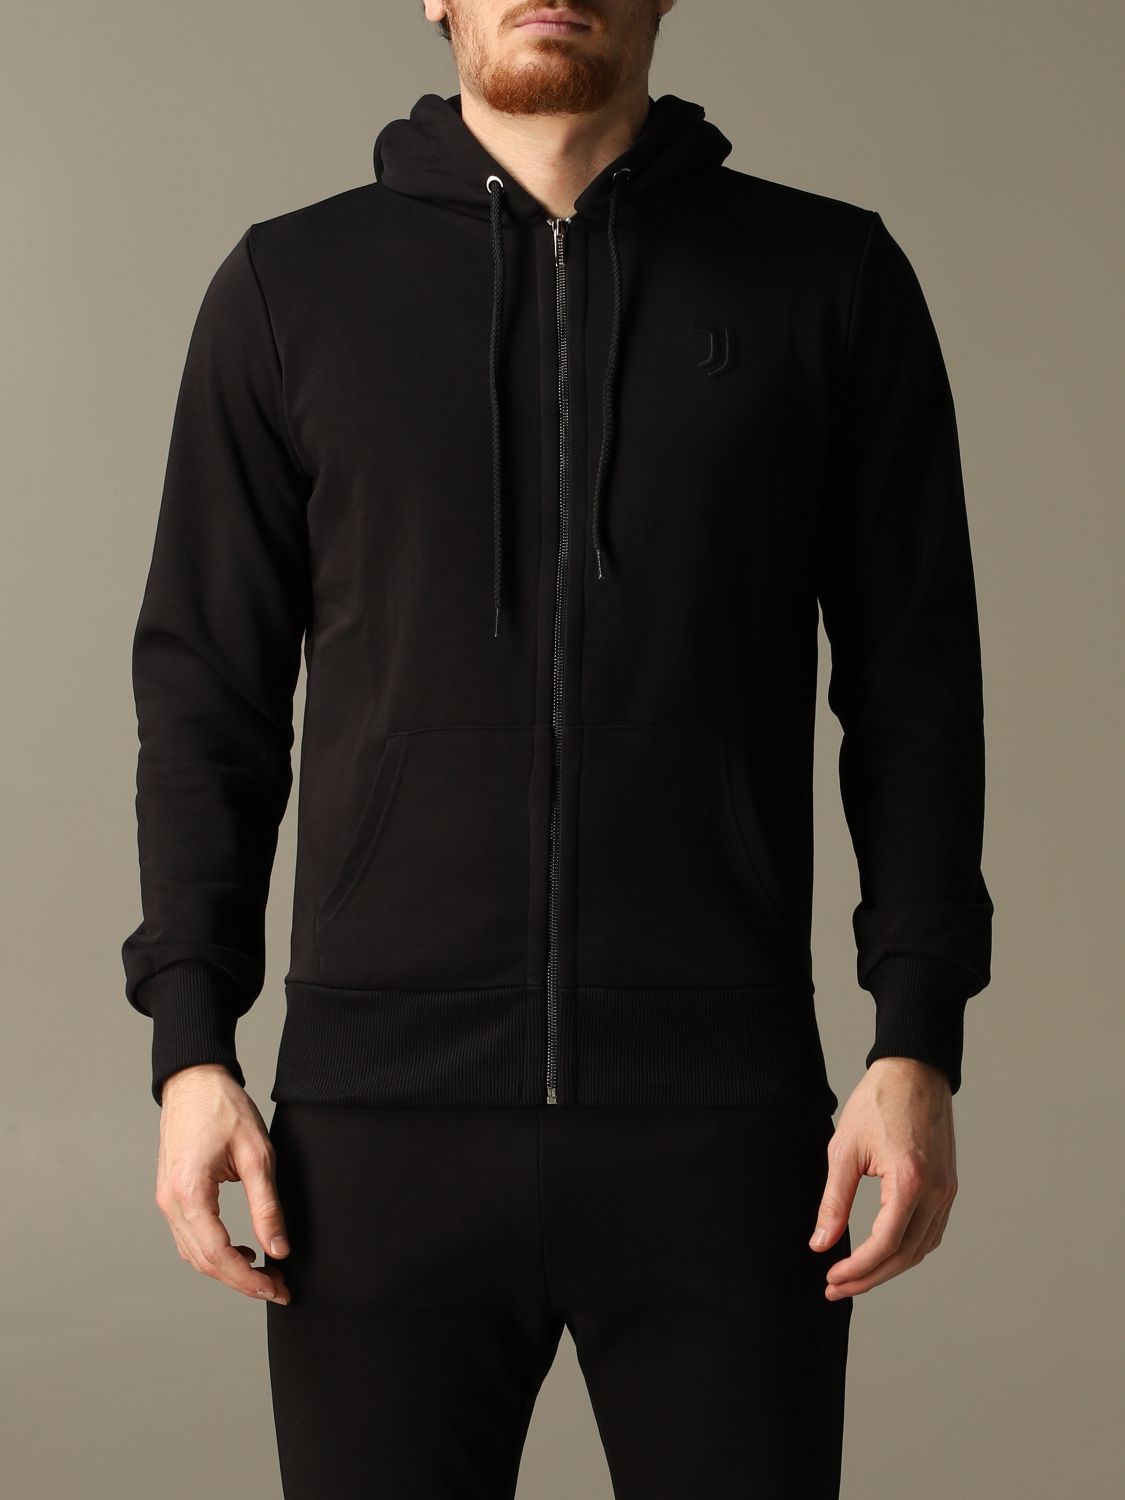 Sweatshirt Juventus Premium: Sweatshirt Juventus Premium homme noir 1